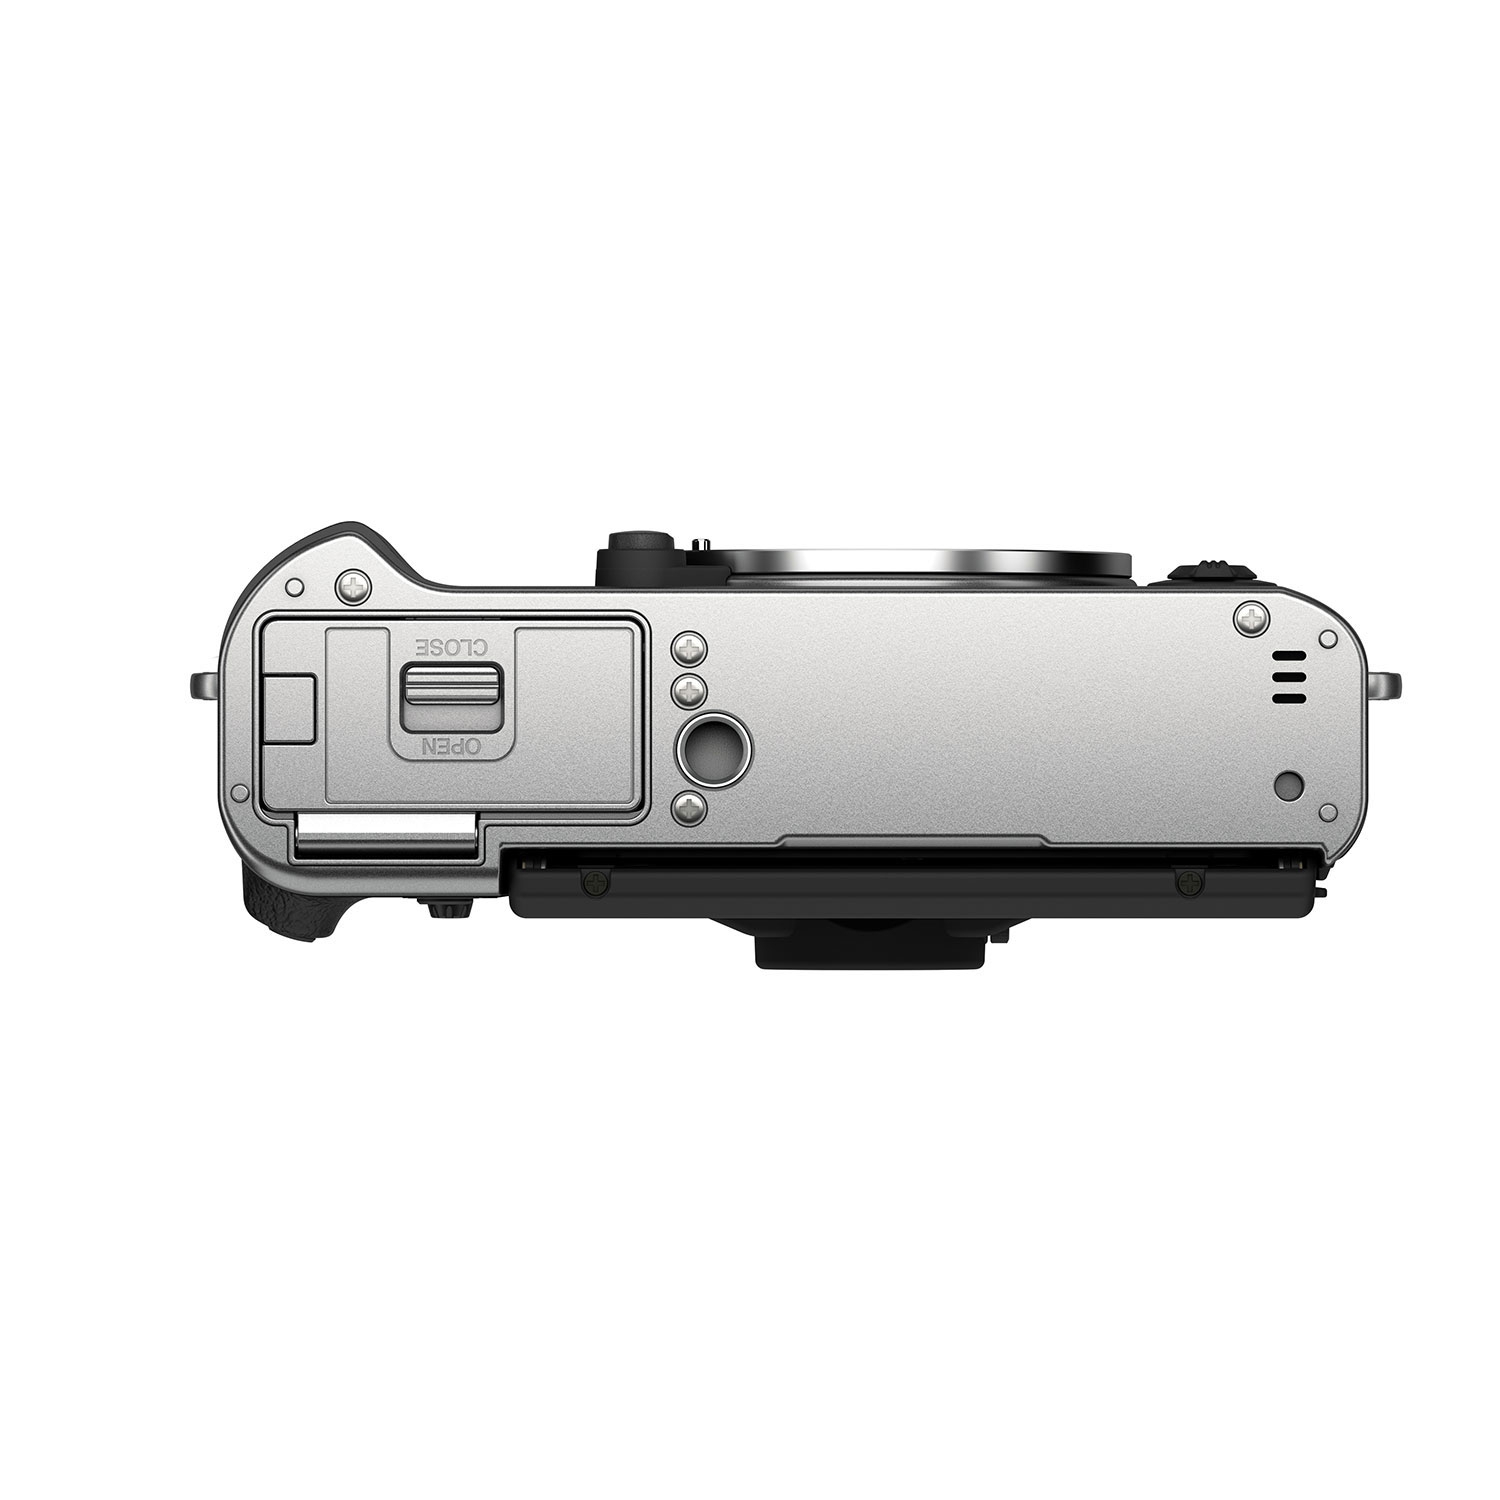 Fujifilm X-T30 II silber + XF 18-55mm 1:2,8-4 R LM OIS VD